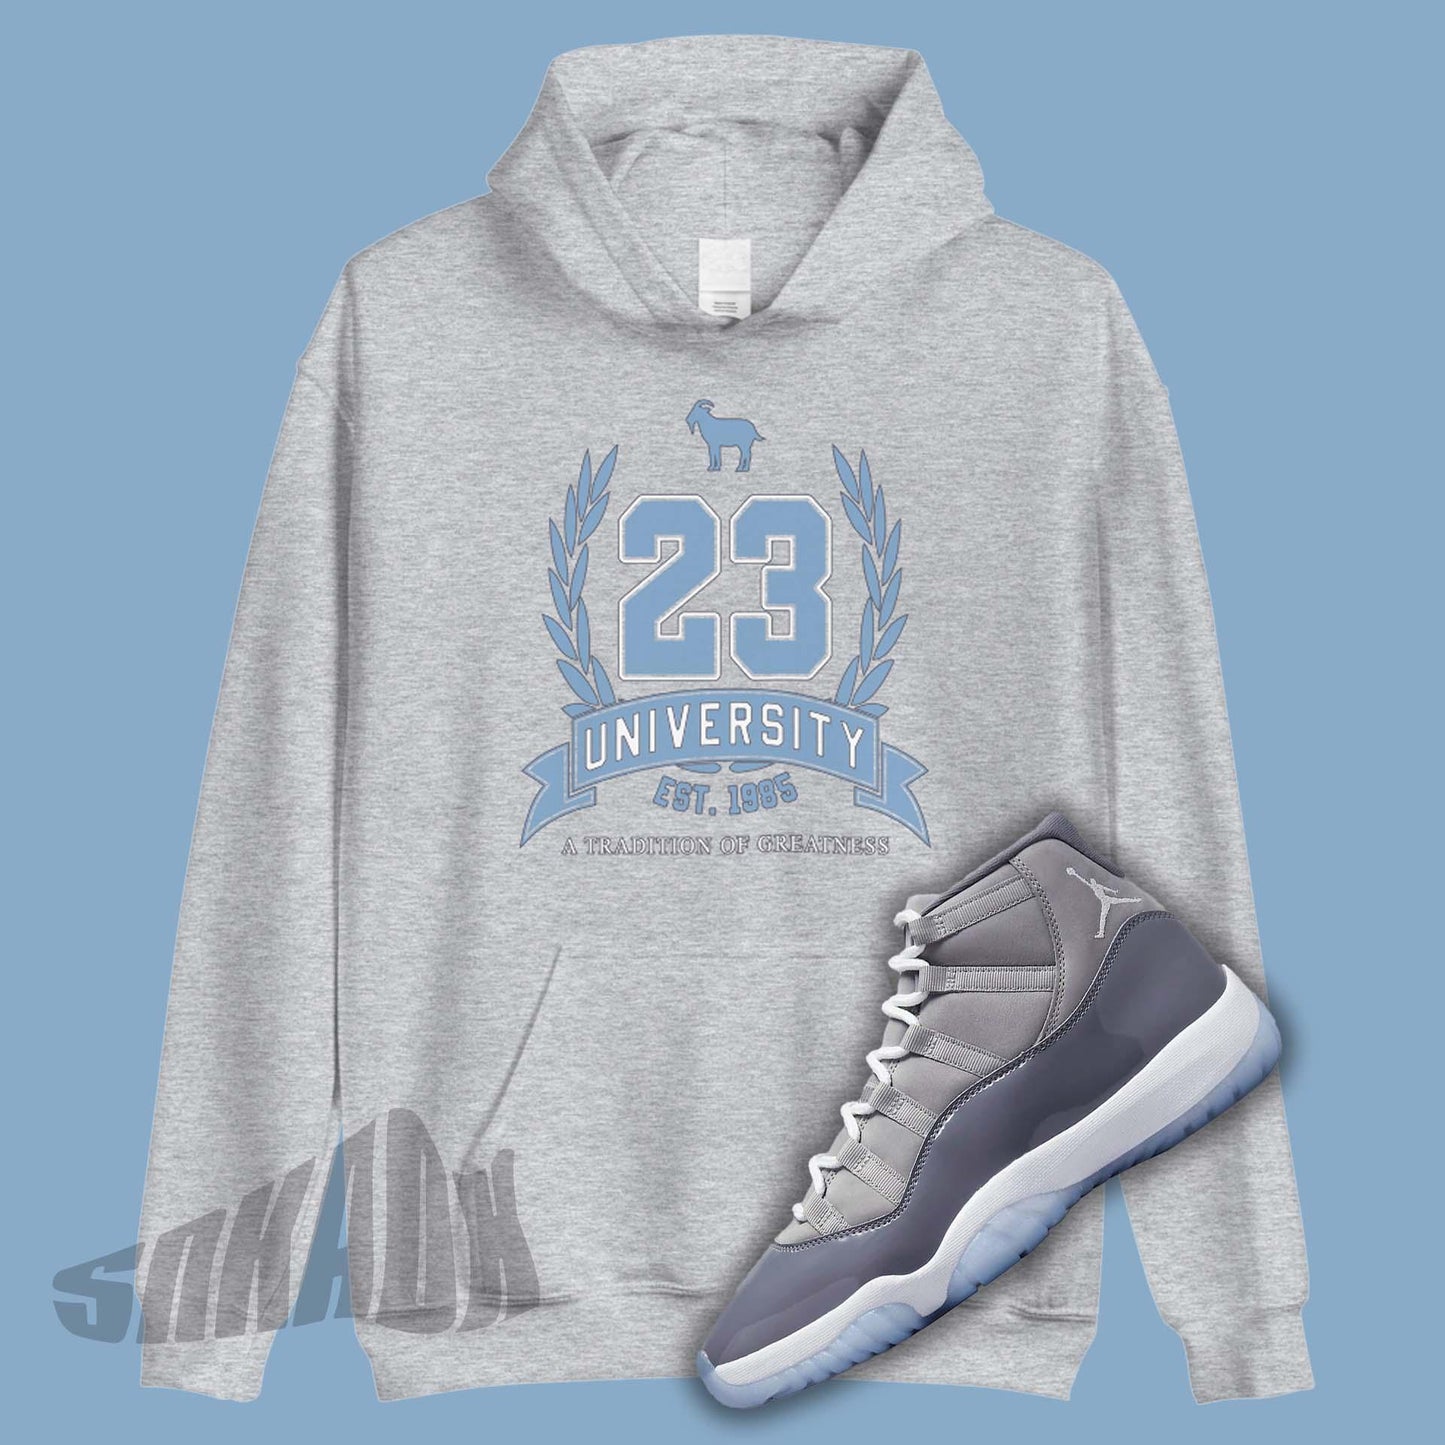 23 University Hoodie To Match Cool Grey Jordan 11